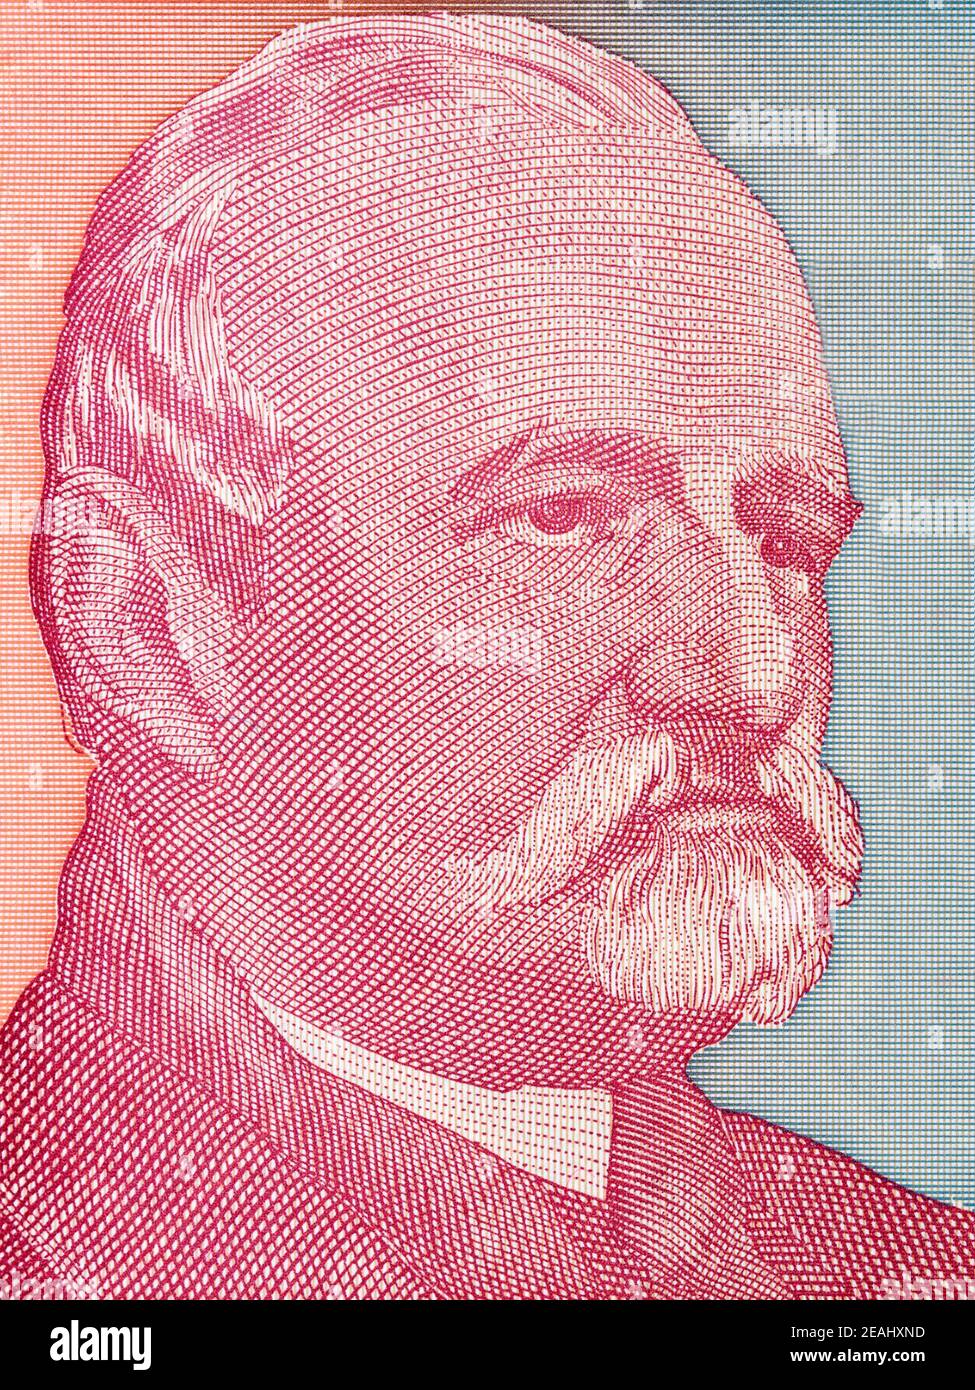 Jovan Jovanovic Zmaj un ritratto dal vecchio denaro jugoslavo Foto Stock